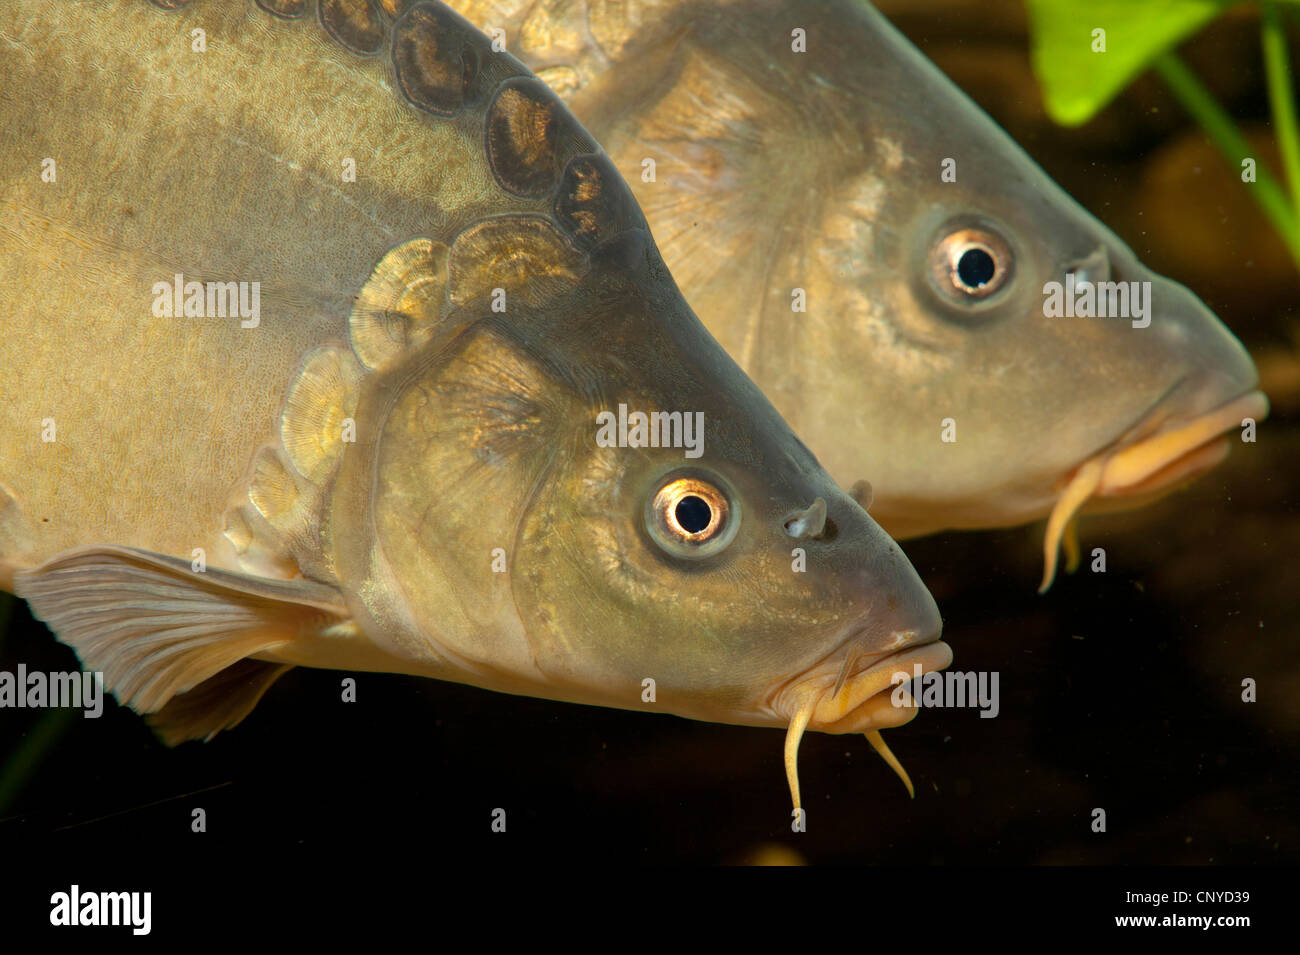 carp, common carp, European carp (Cyprinus carpio), portraits of two mirror carps Stock Photo